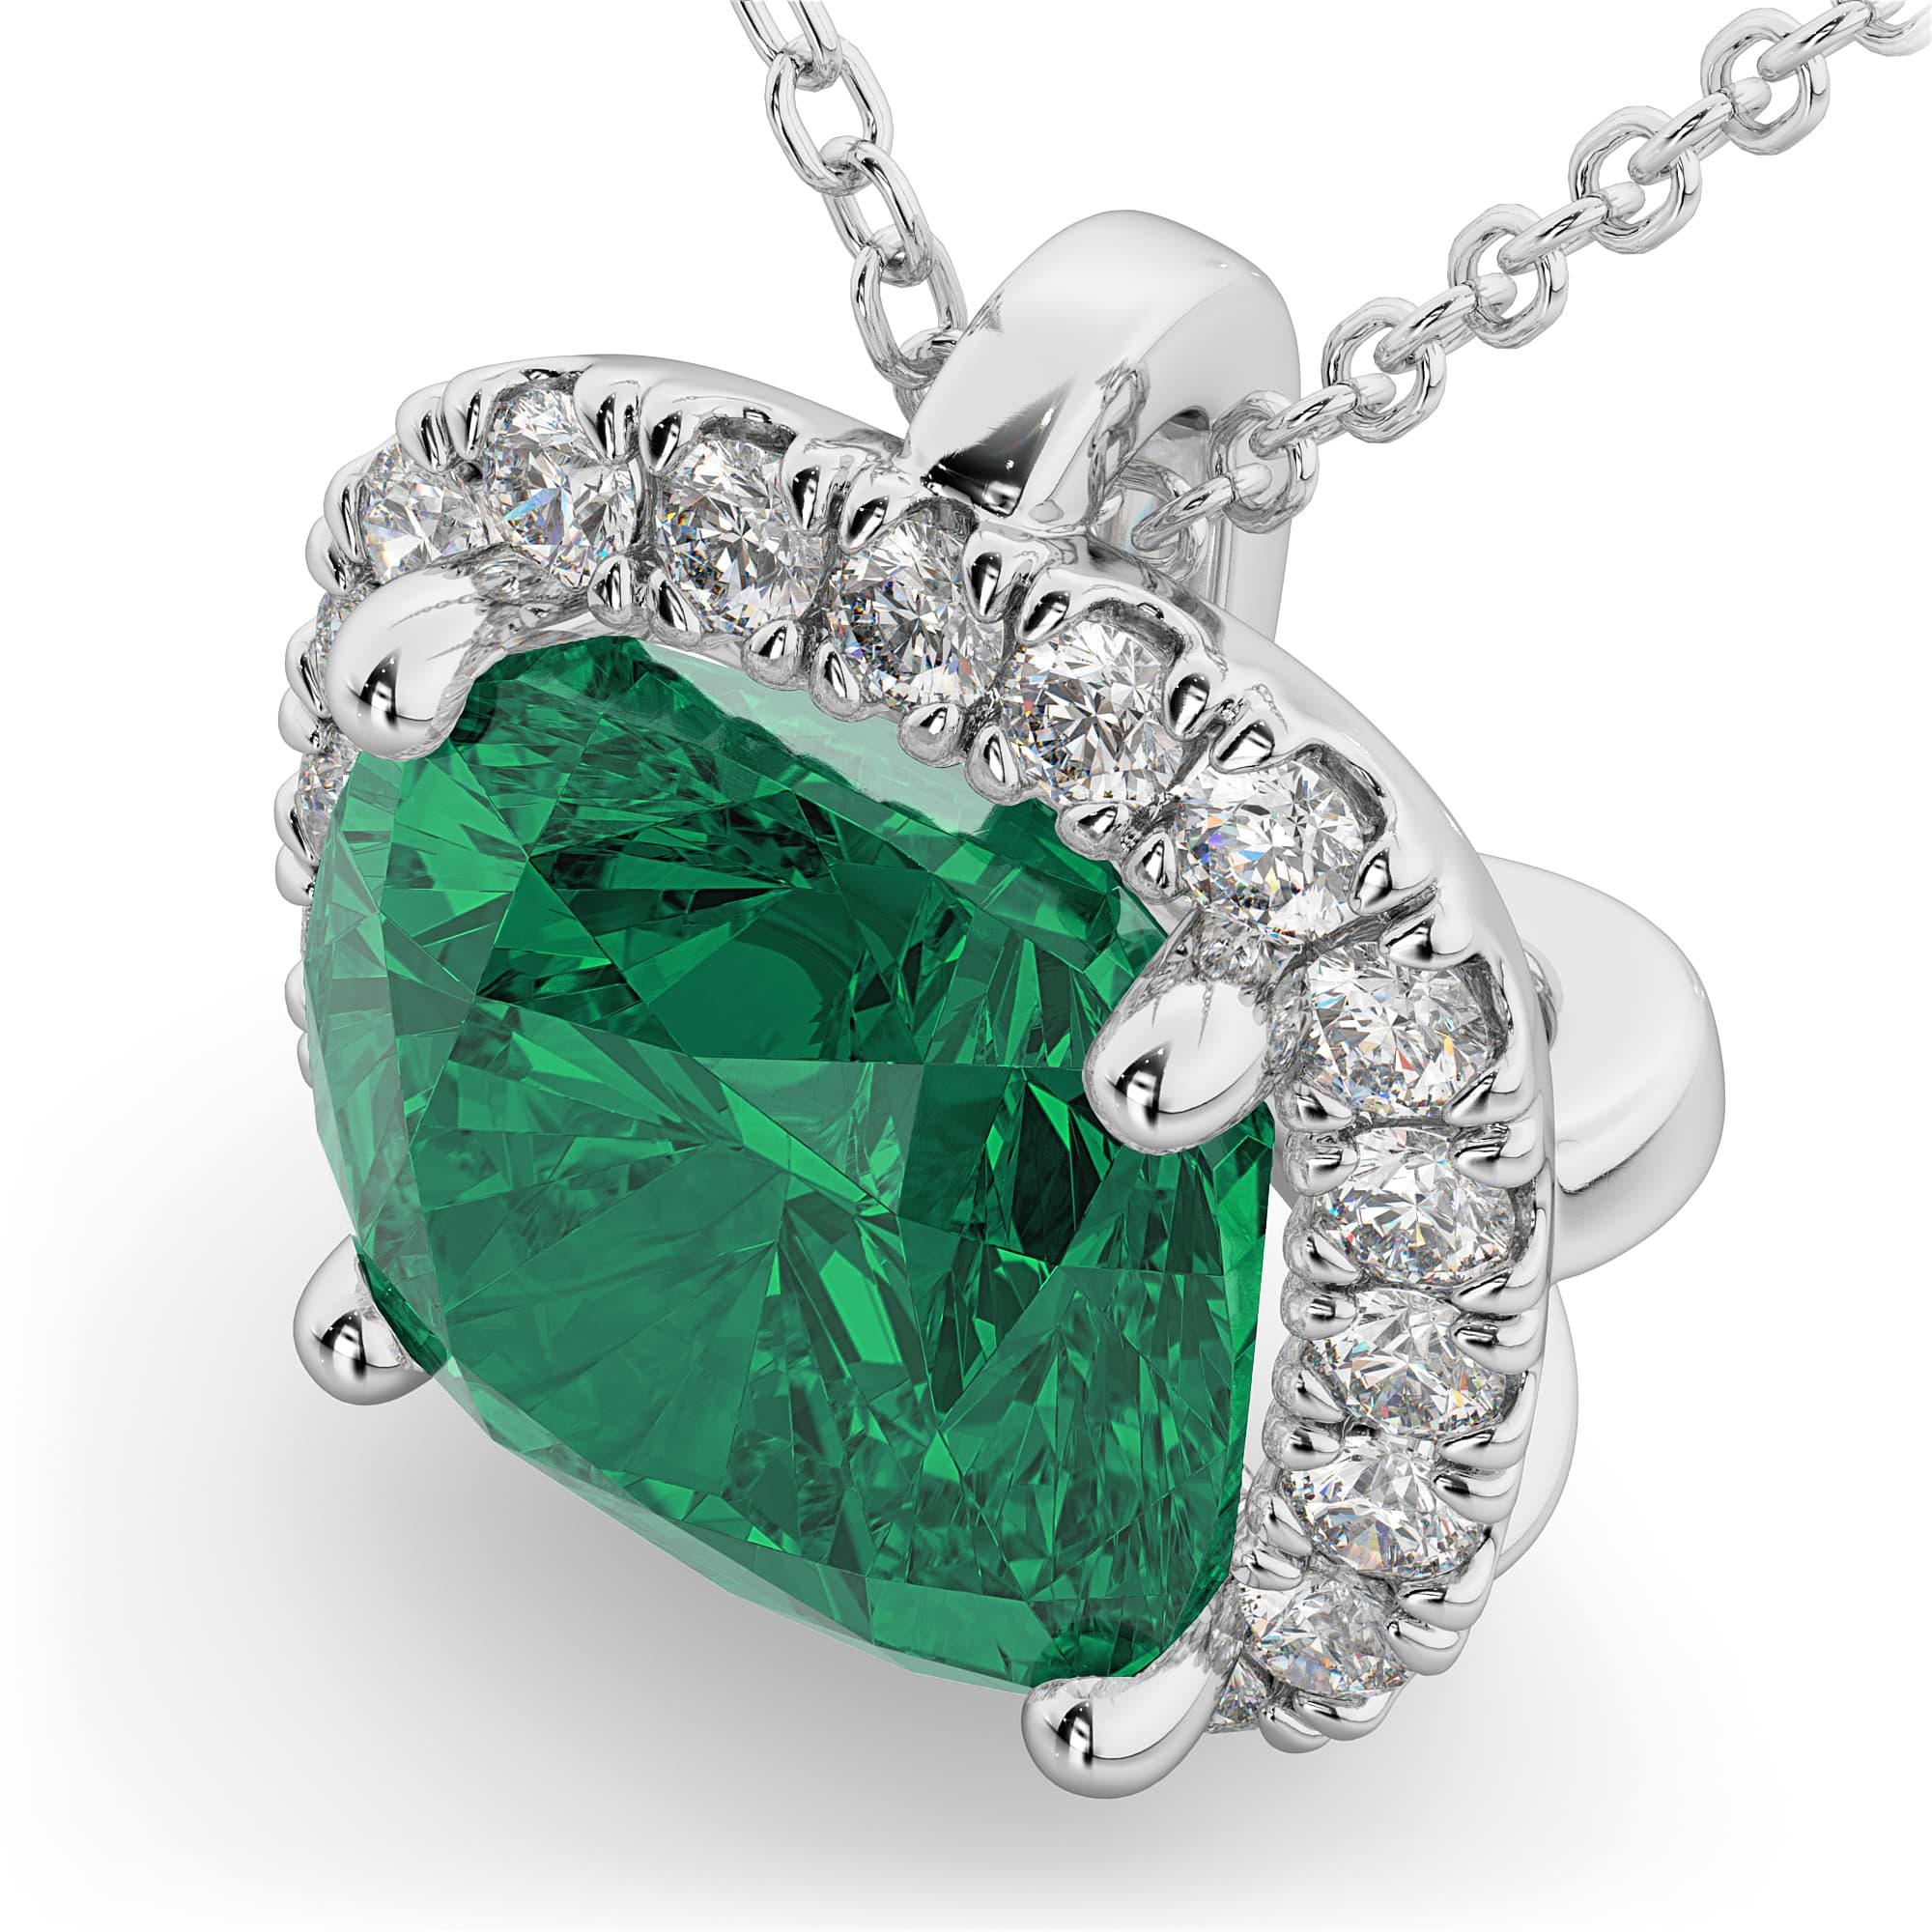 Halo Emerald Cushion Cut Pendant Necklace 14k White Gold (2.02ct)